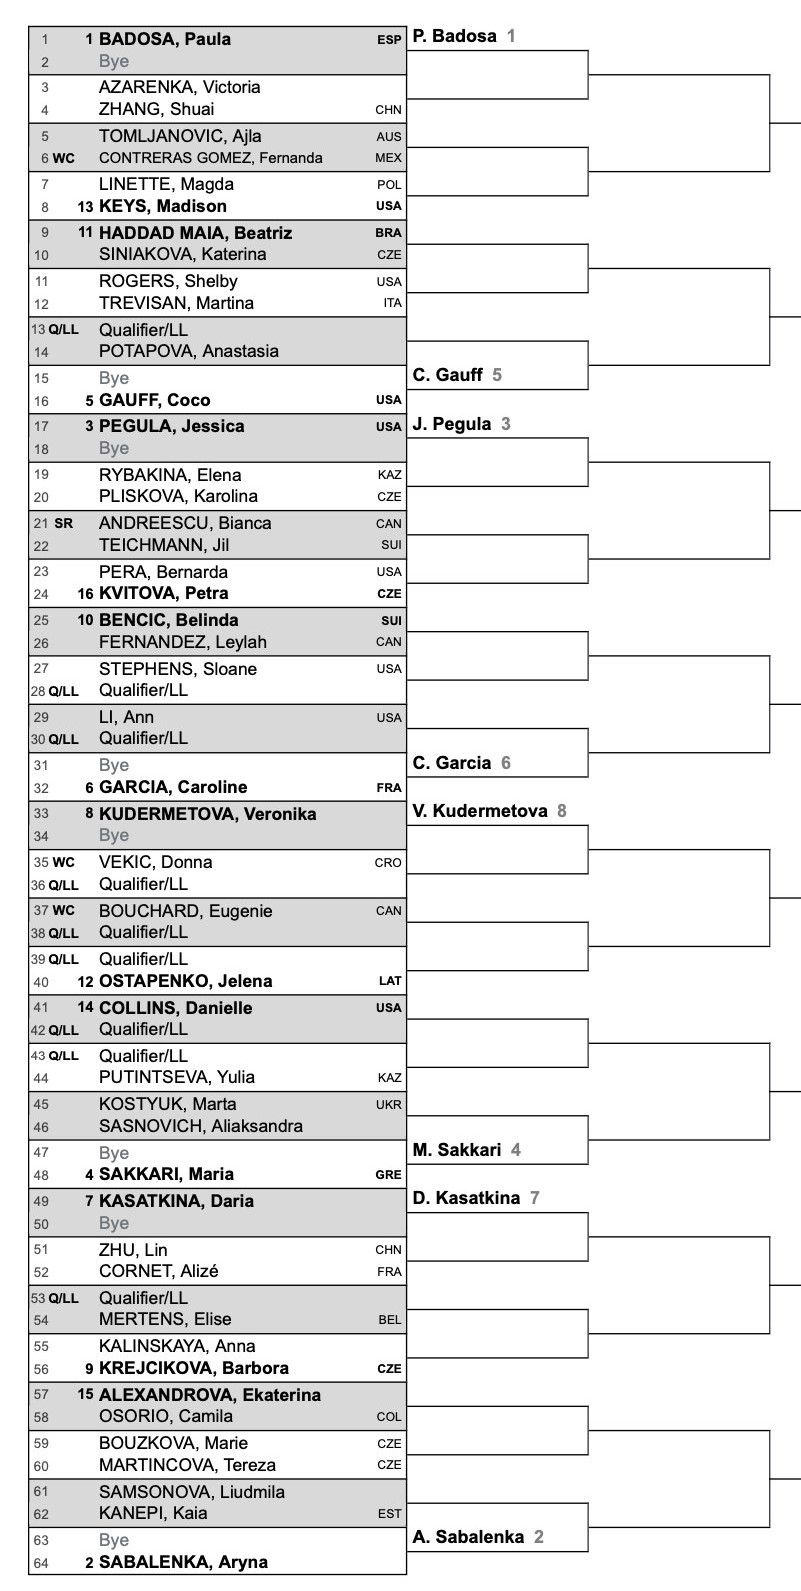 2022 Guadalajara Open Akron Draw including Badosa, Sabalenka, Sakkari